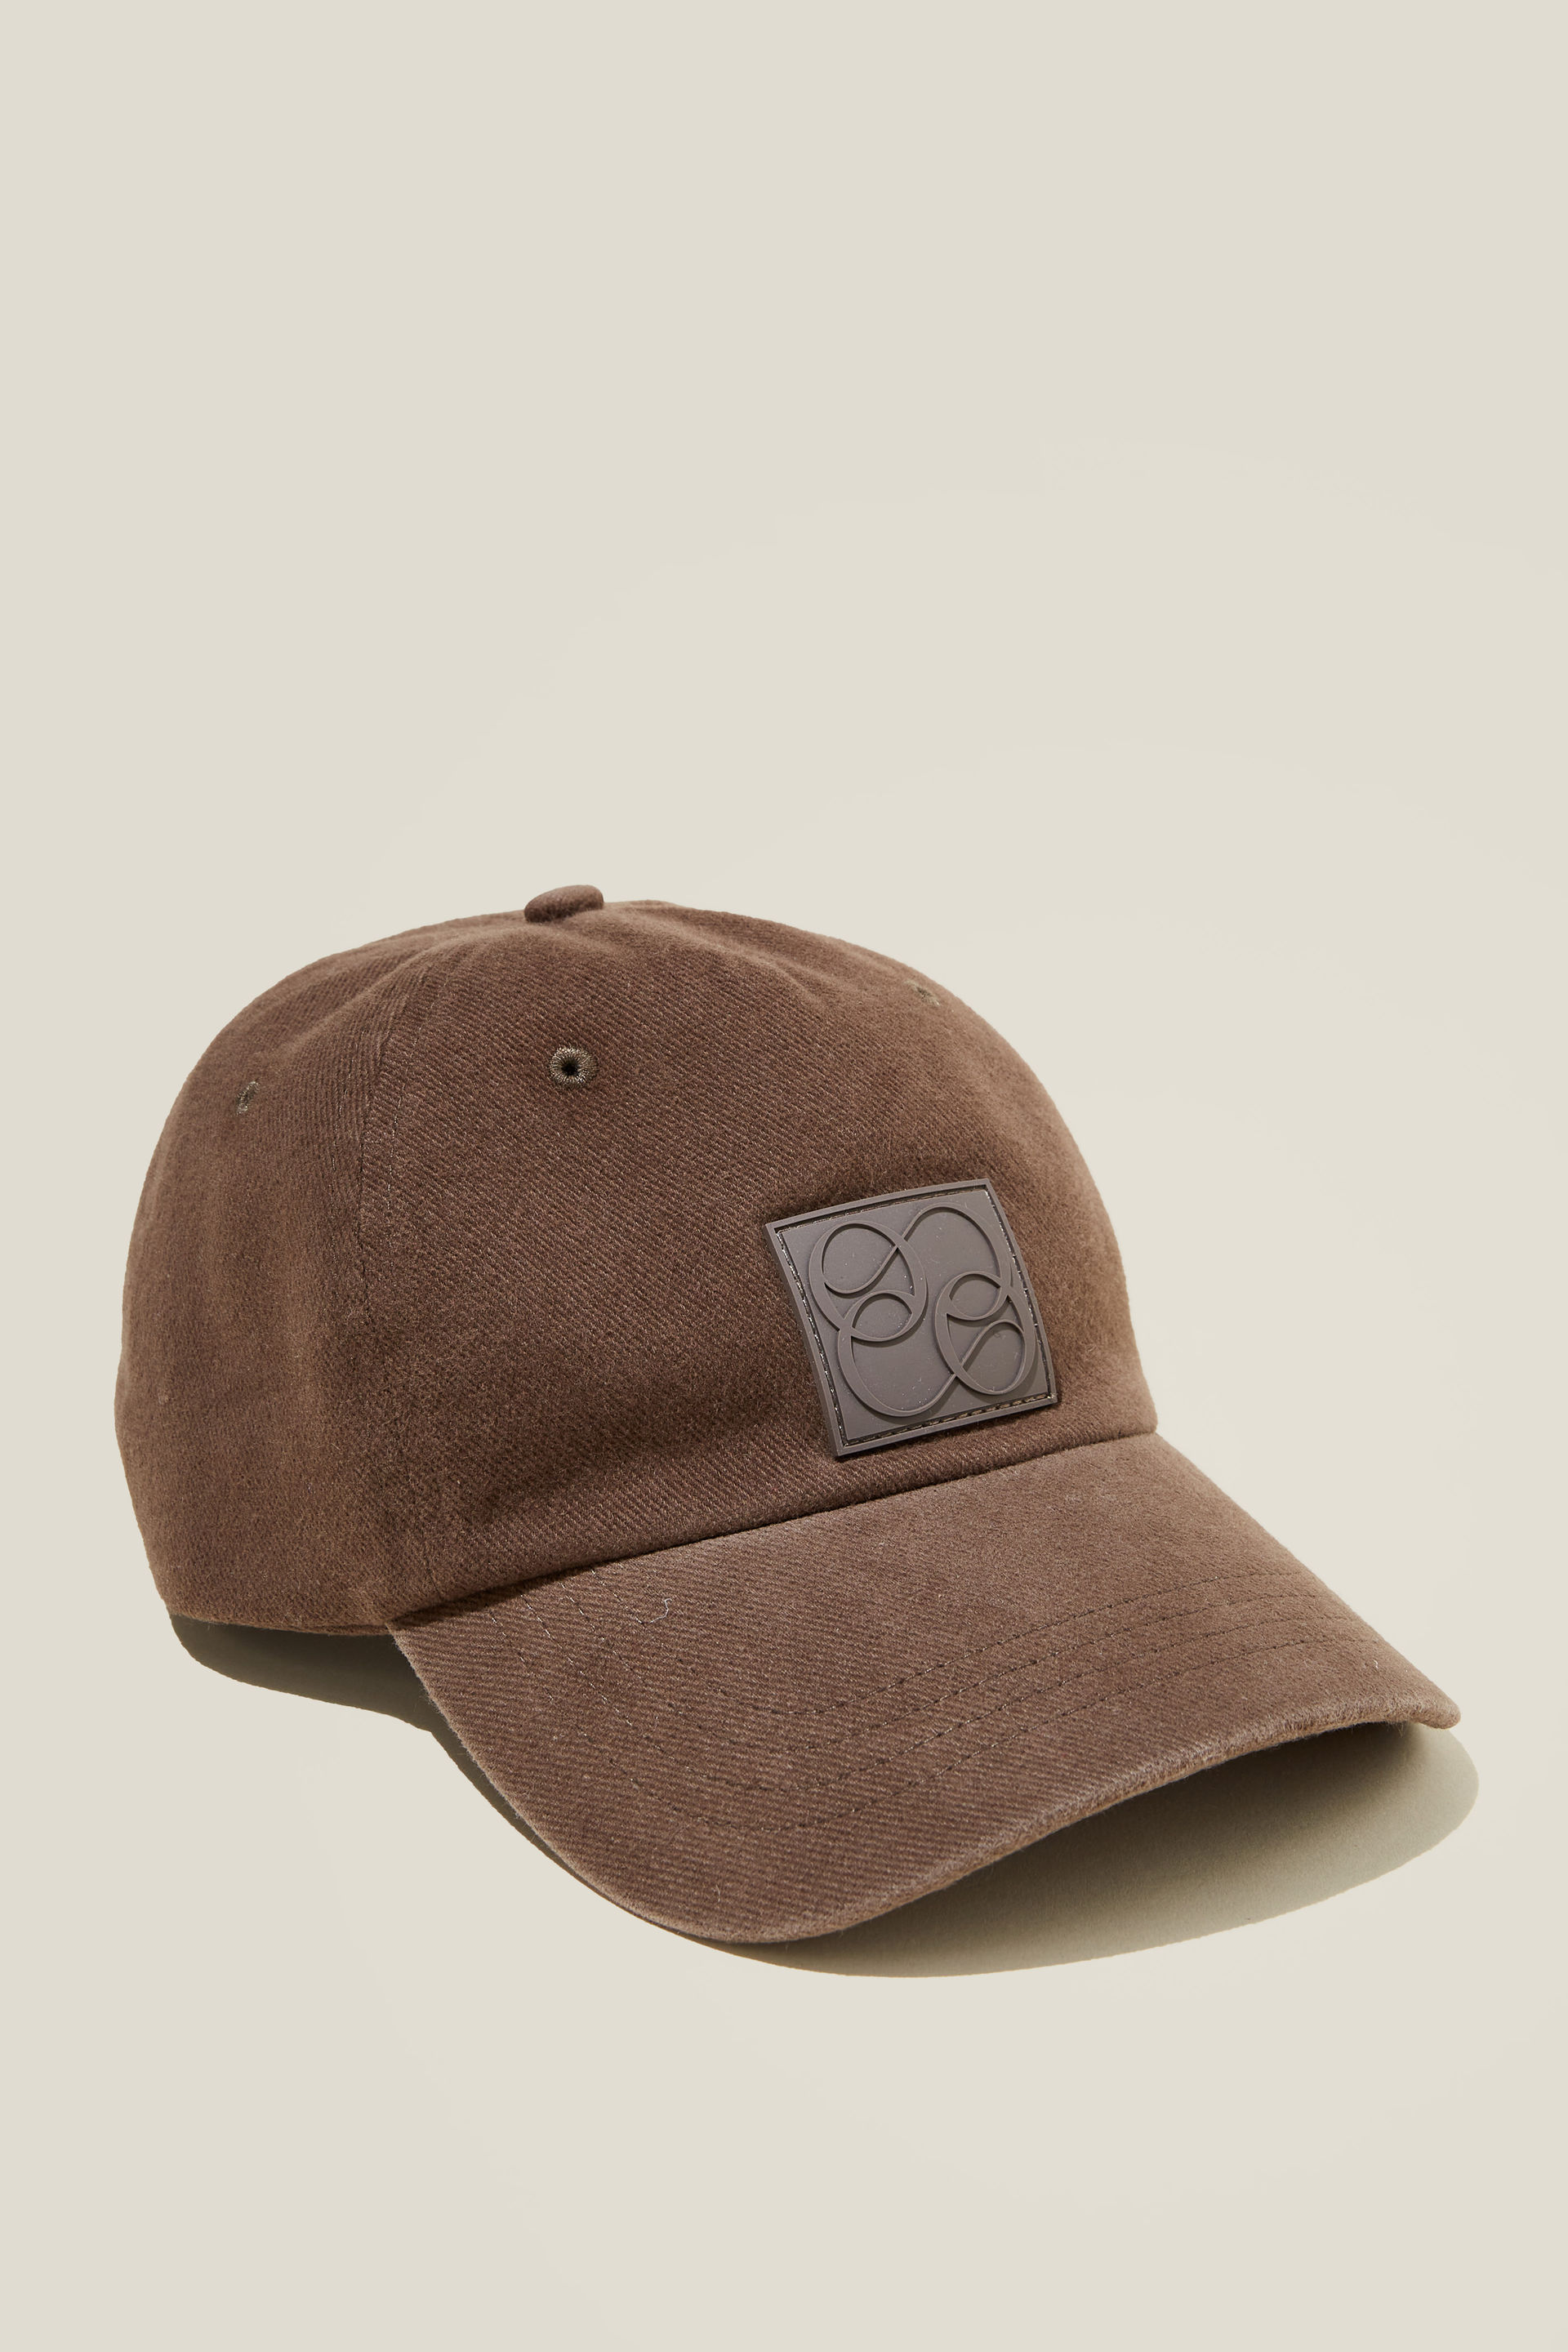 Rubi - Classic Monogram Patch Cap - Co logo patch/charcoal